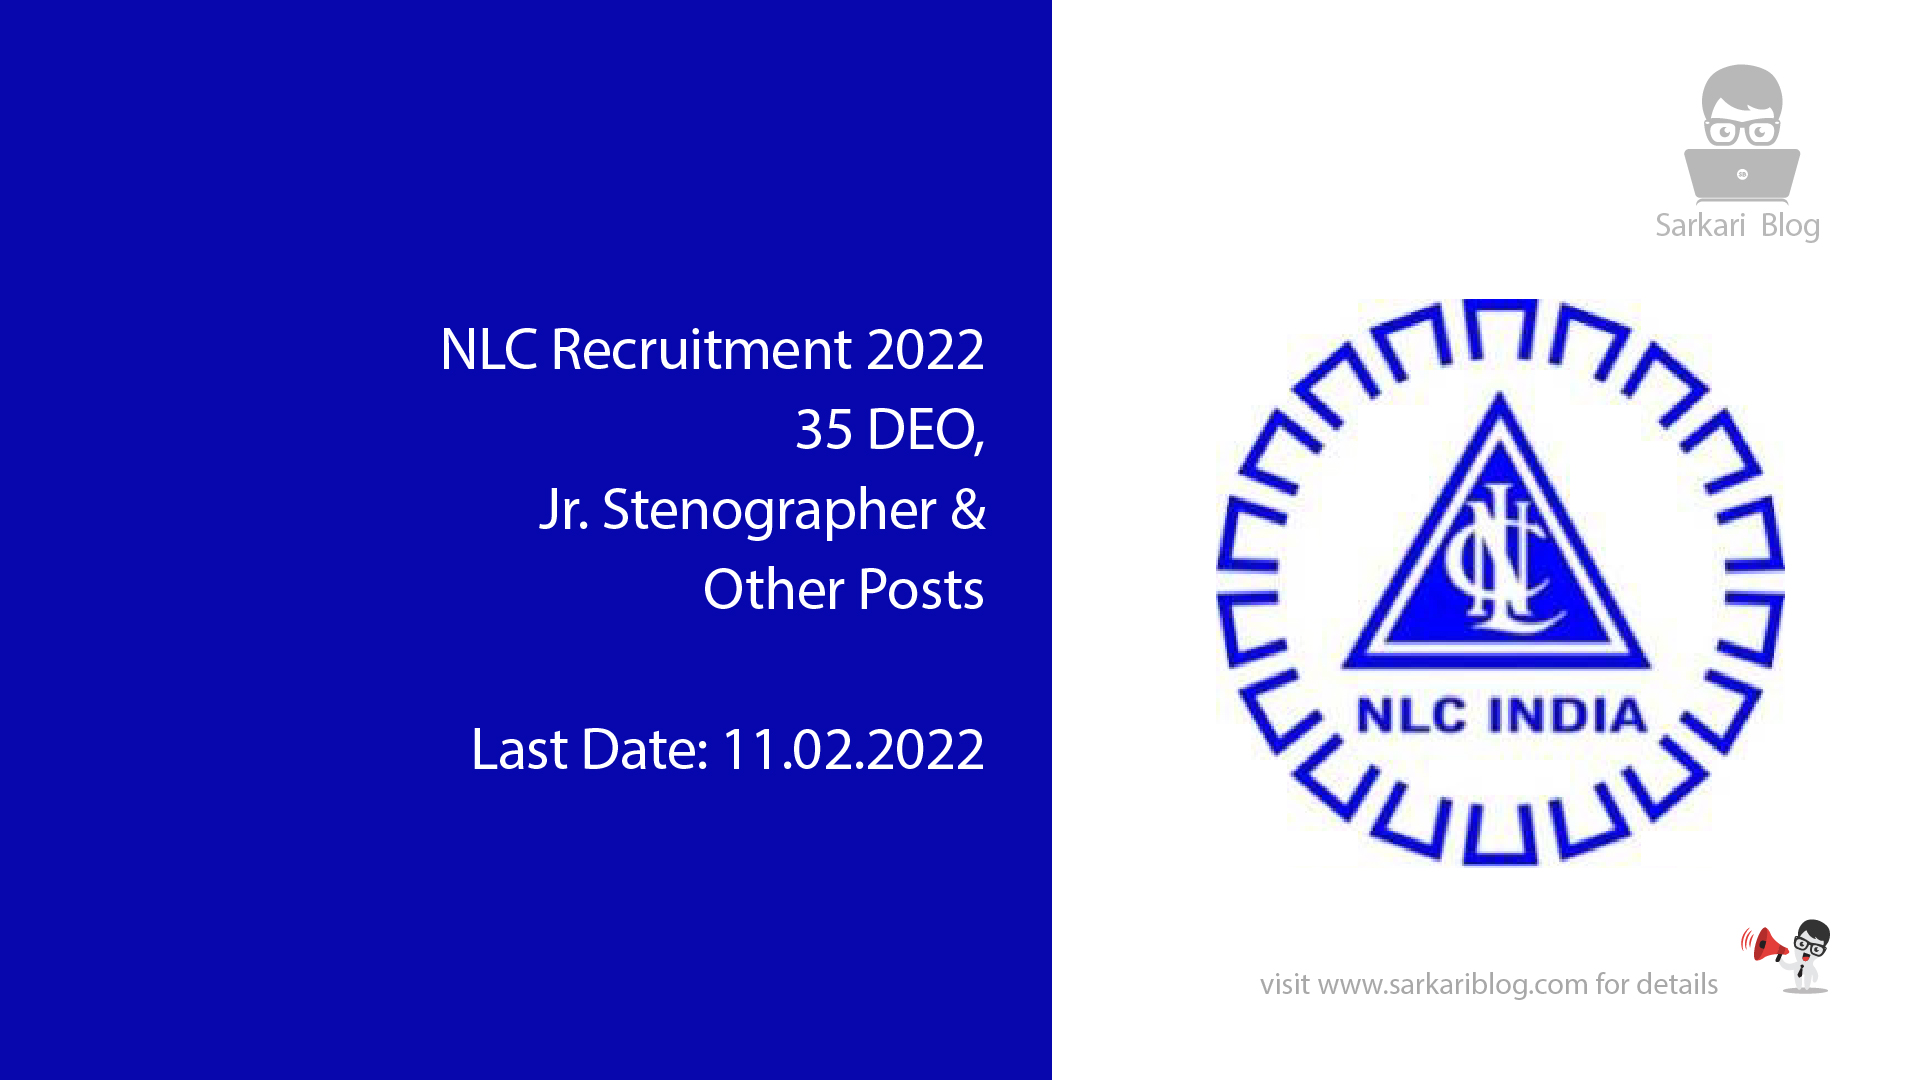 NLC Recruitment 2022